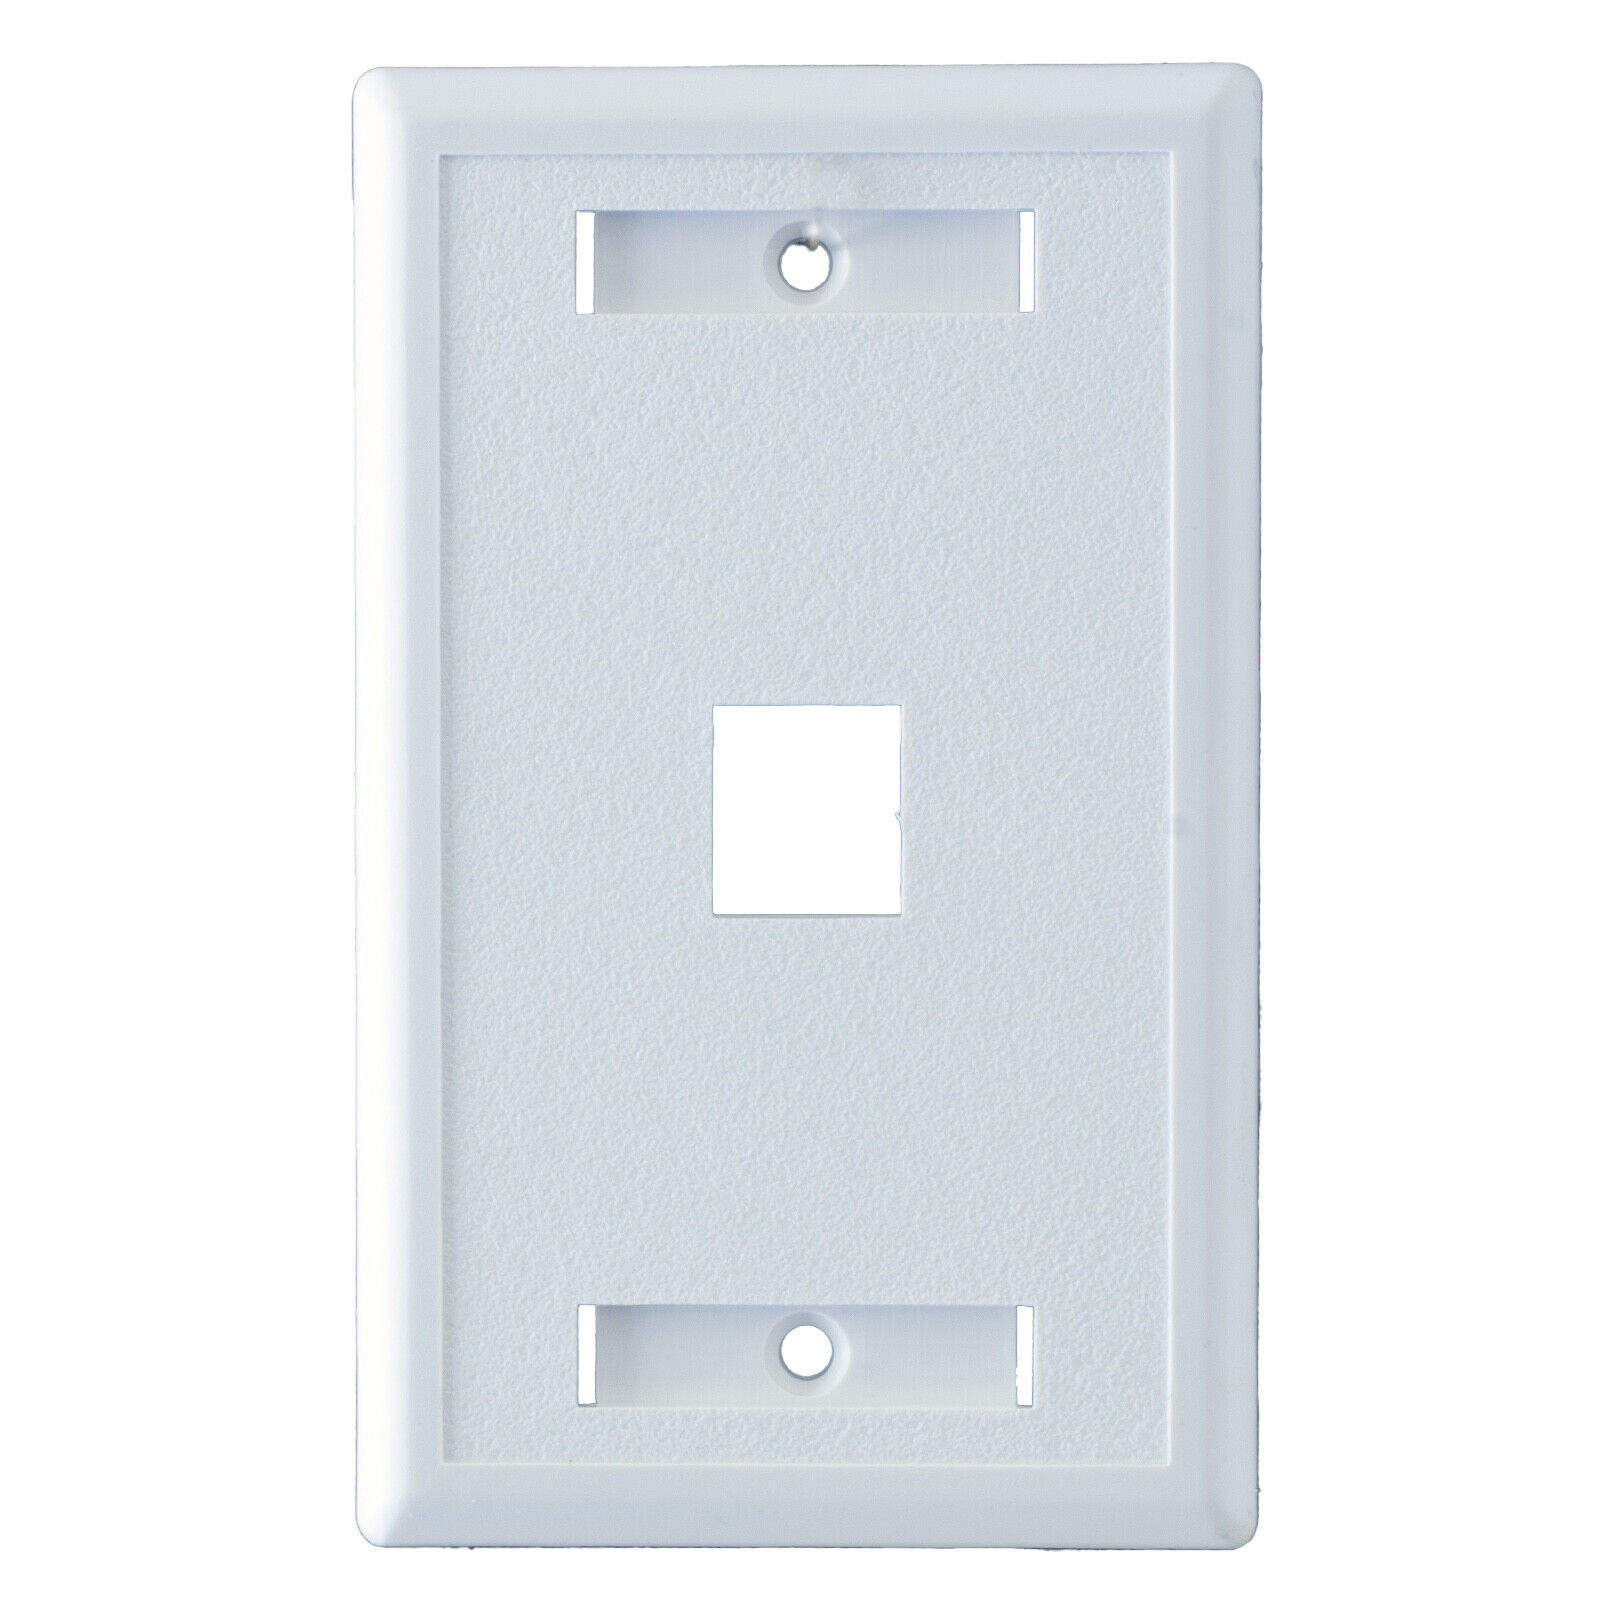 1 Port Keystone Wall Plate White with Windows 12 Pcs Pack Cat5e Ca6 Phone RJ-11